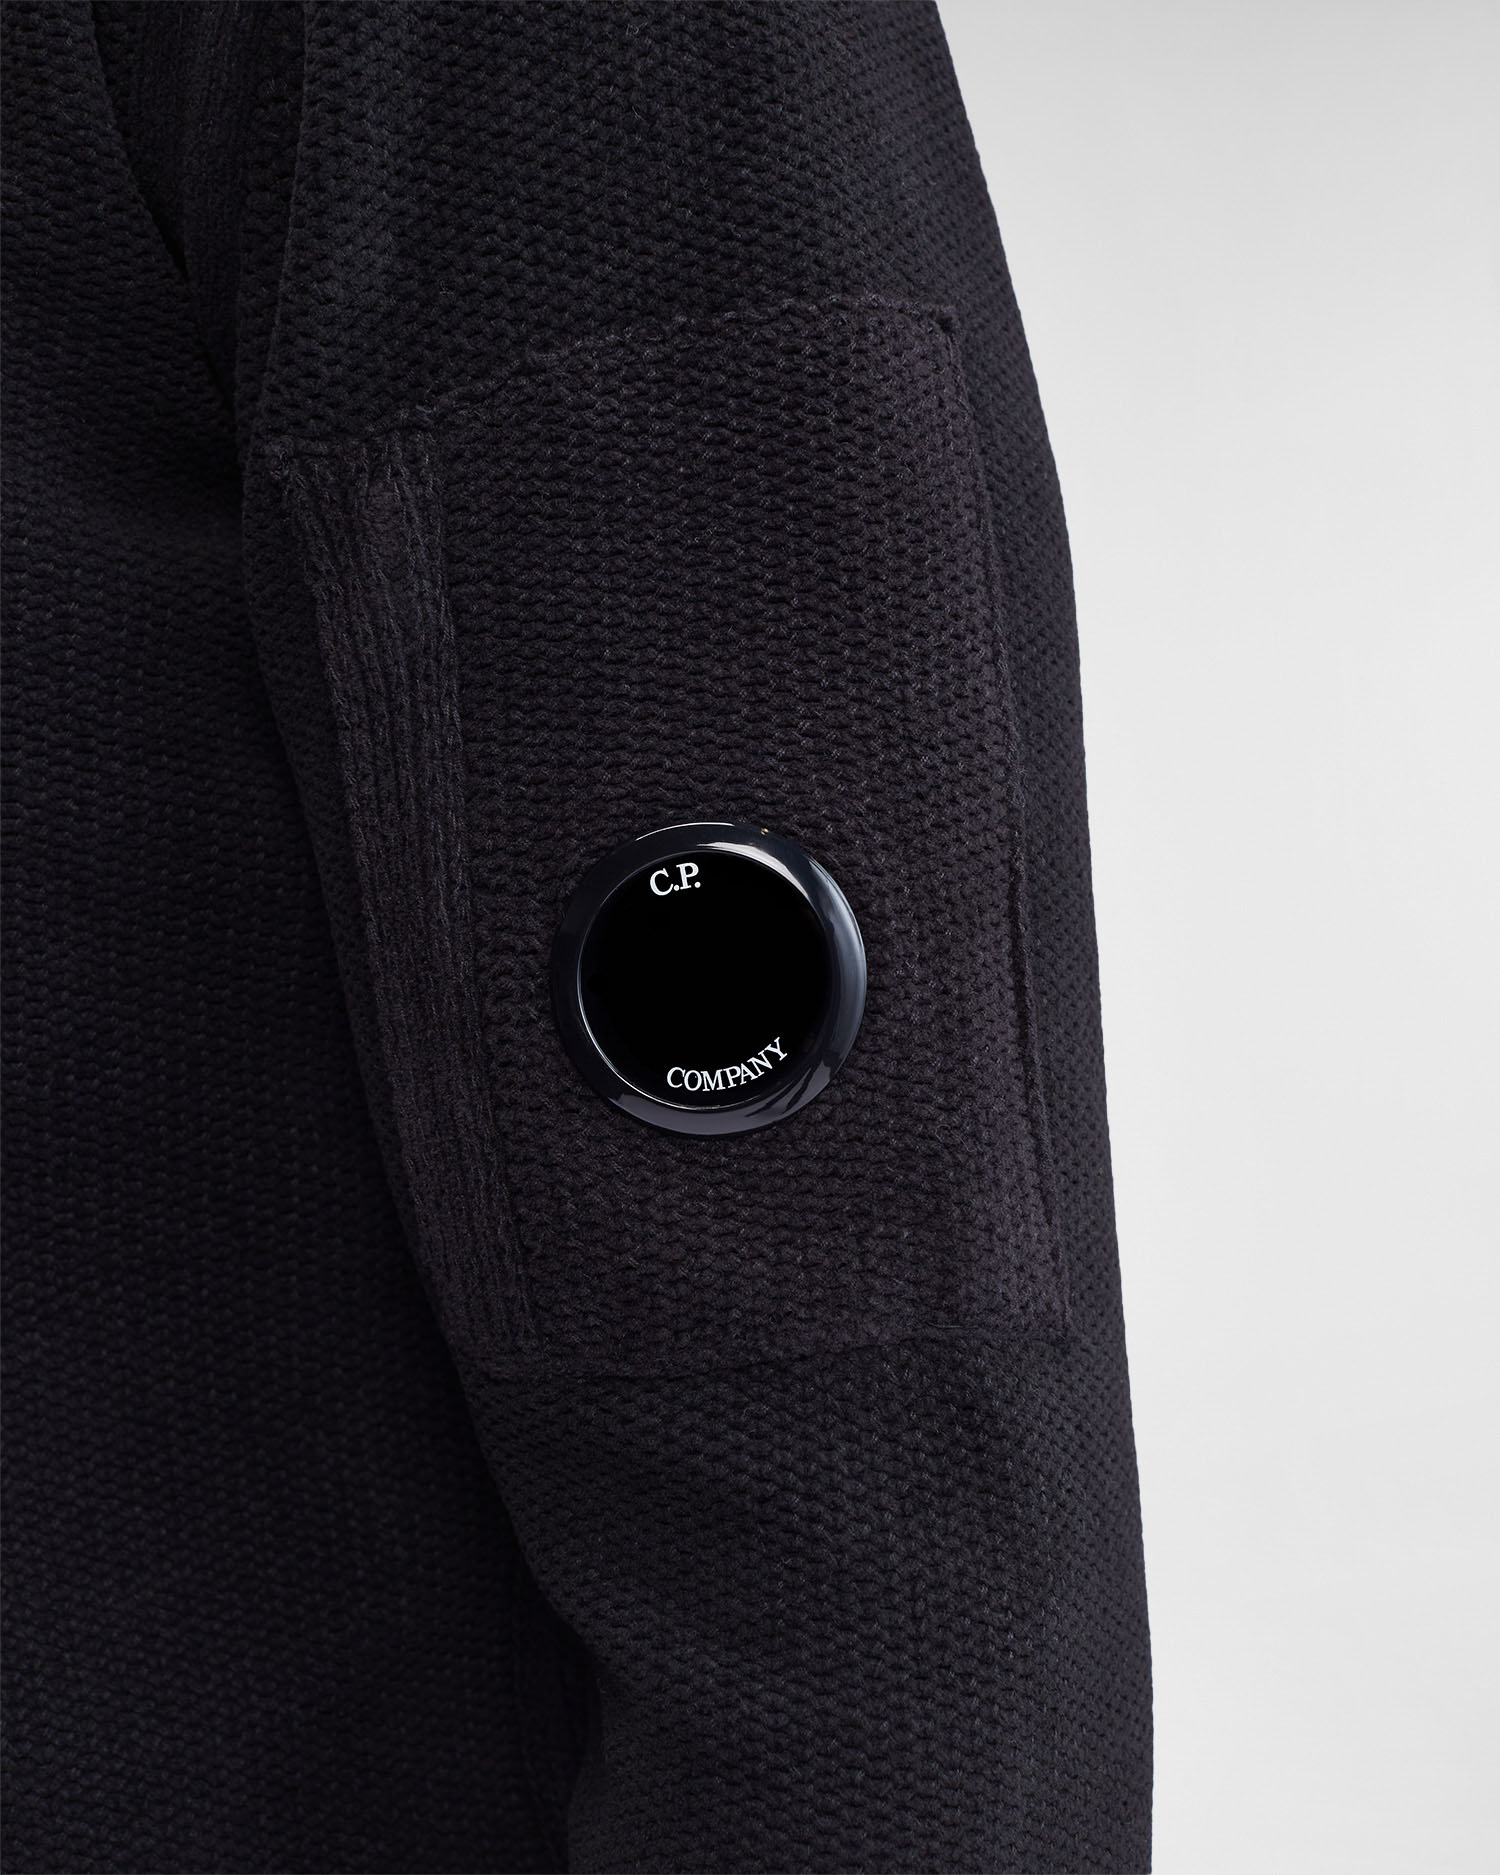 C.P. COMPANY Soft Cotton Knit Pullover in Black